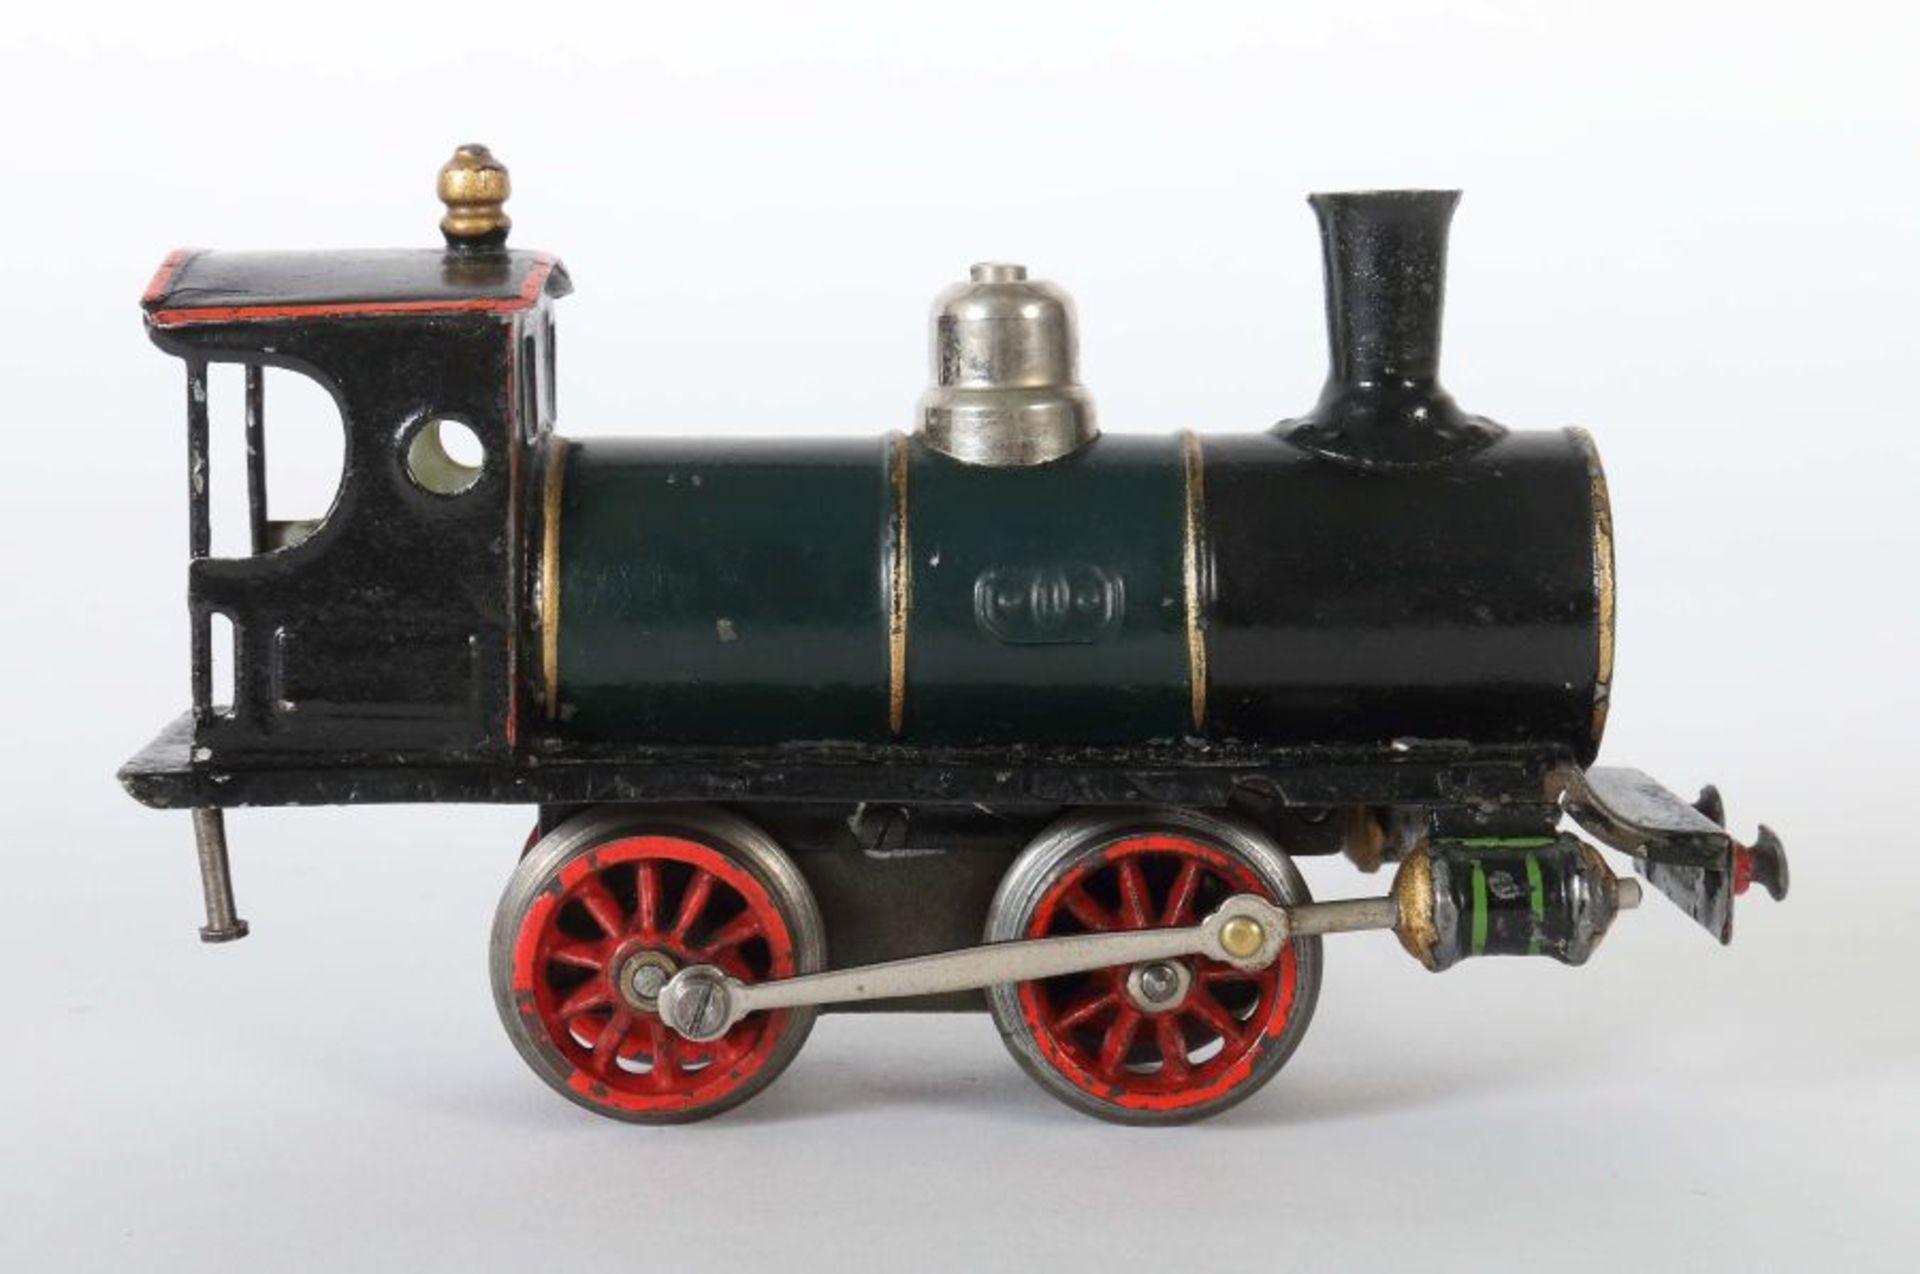 Dampflok Märklin, Spur 0, B 1020, BZ 1903-1905, grün/schwarz HL, Kesselschild erhaben: "0", - Bild 2 aus 2